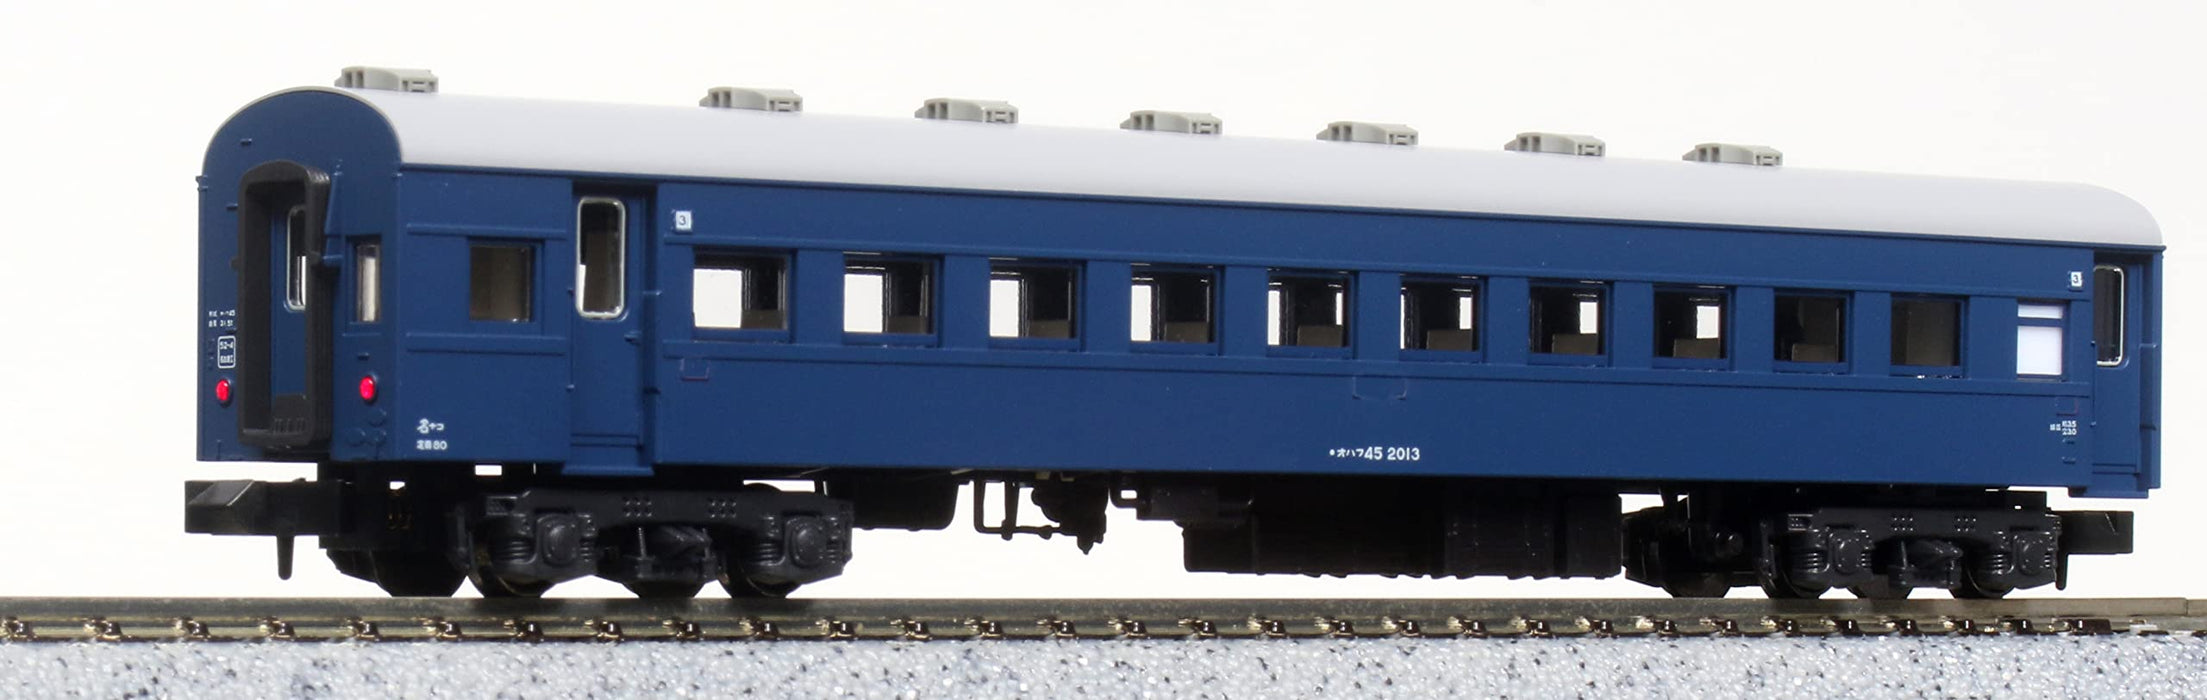 KATO  5300 Passenger Car Ohafu 45 Blue  N Scale